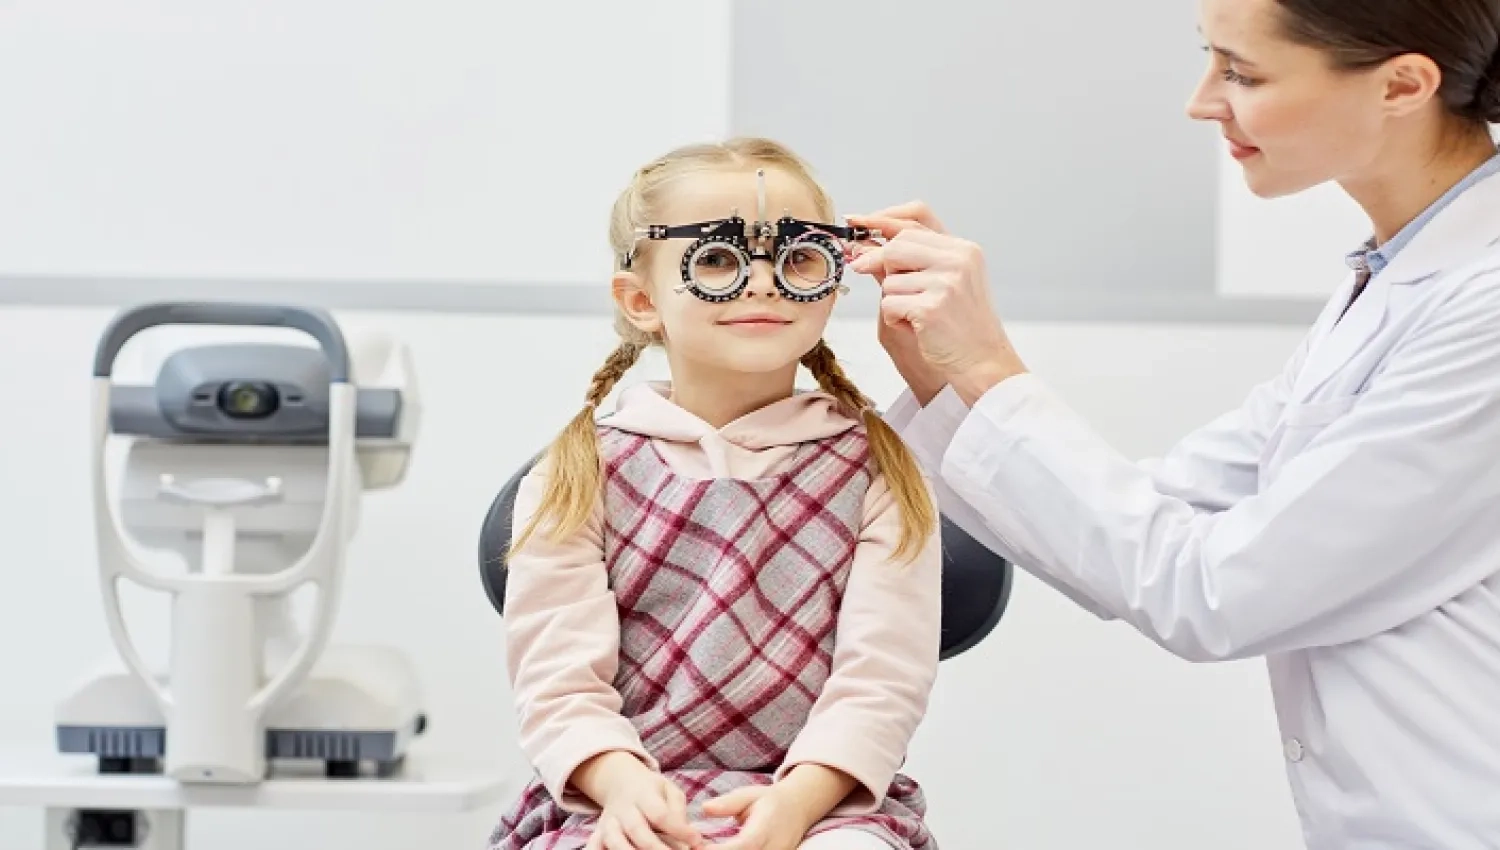 Child eye health